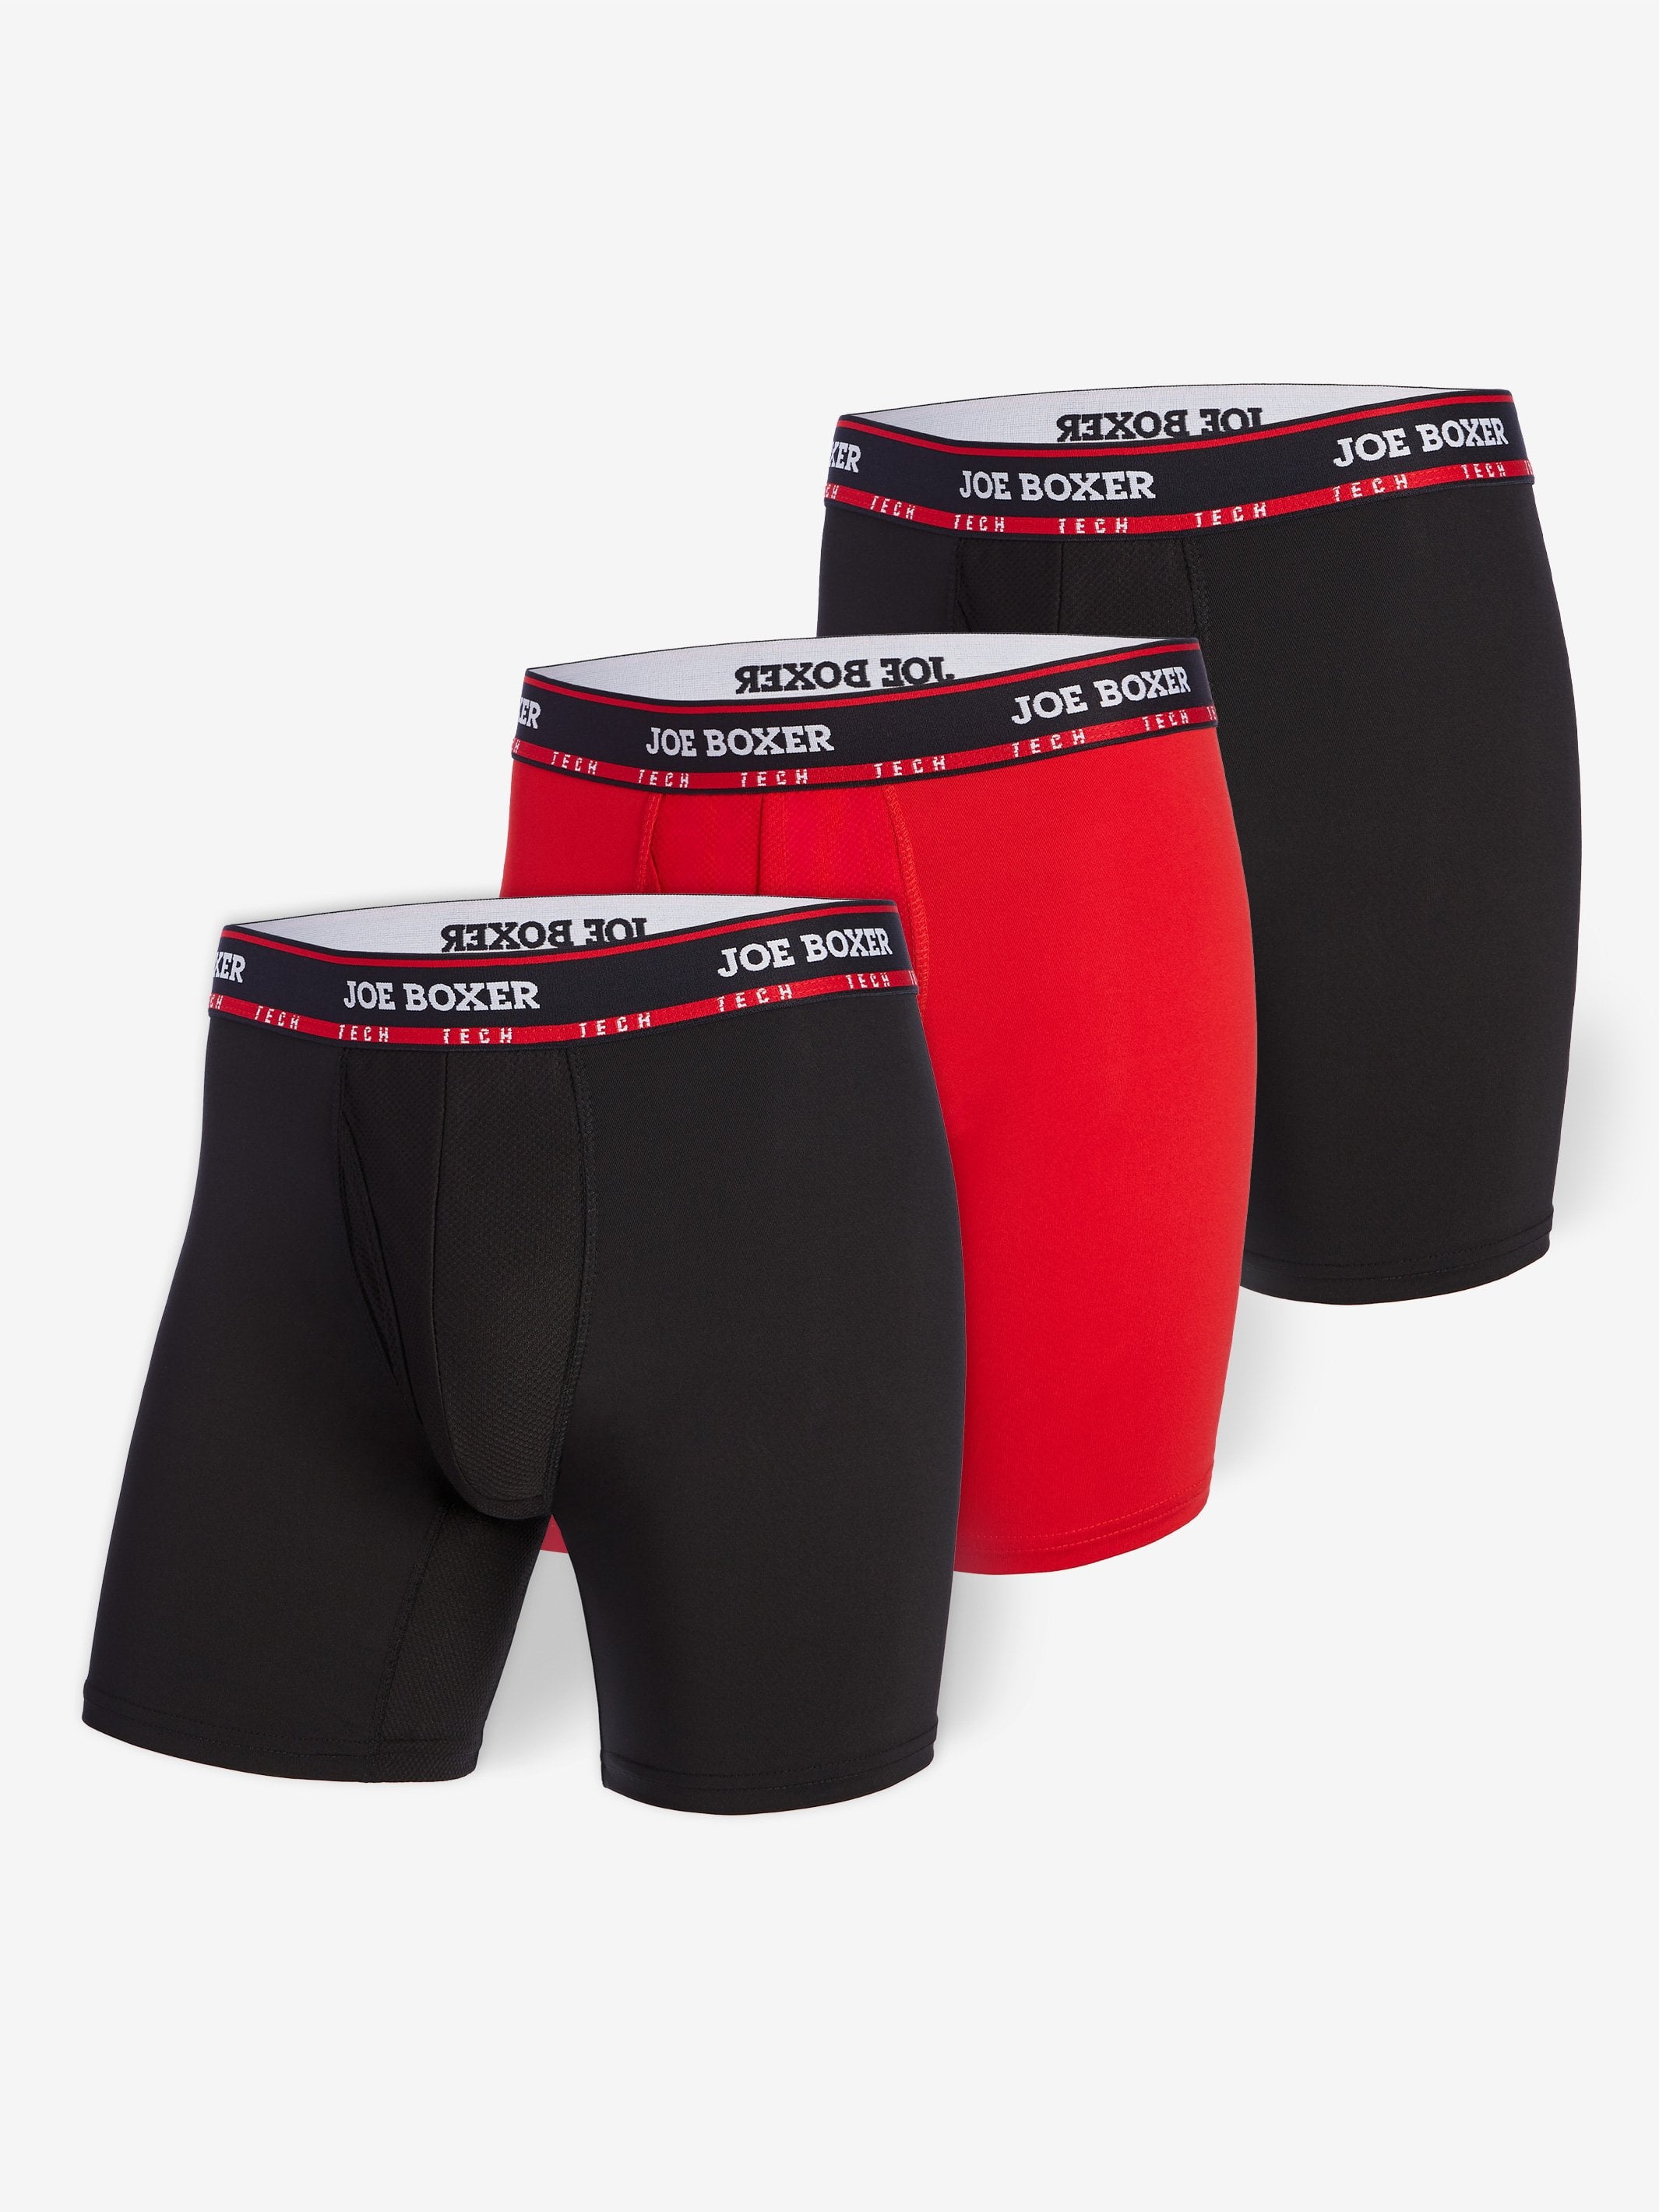 JOCKEY Mens FORMULA RED Euro Sport Underwear Brief Size L (US Waist 34) 